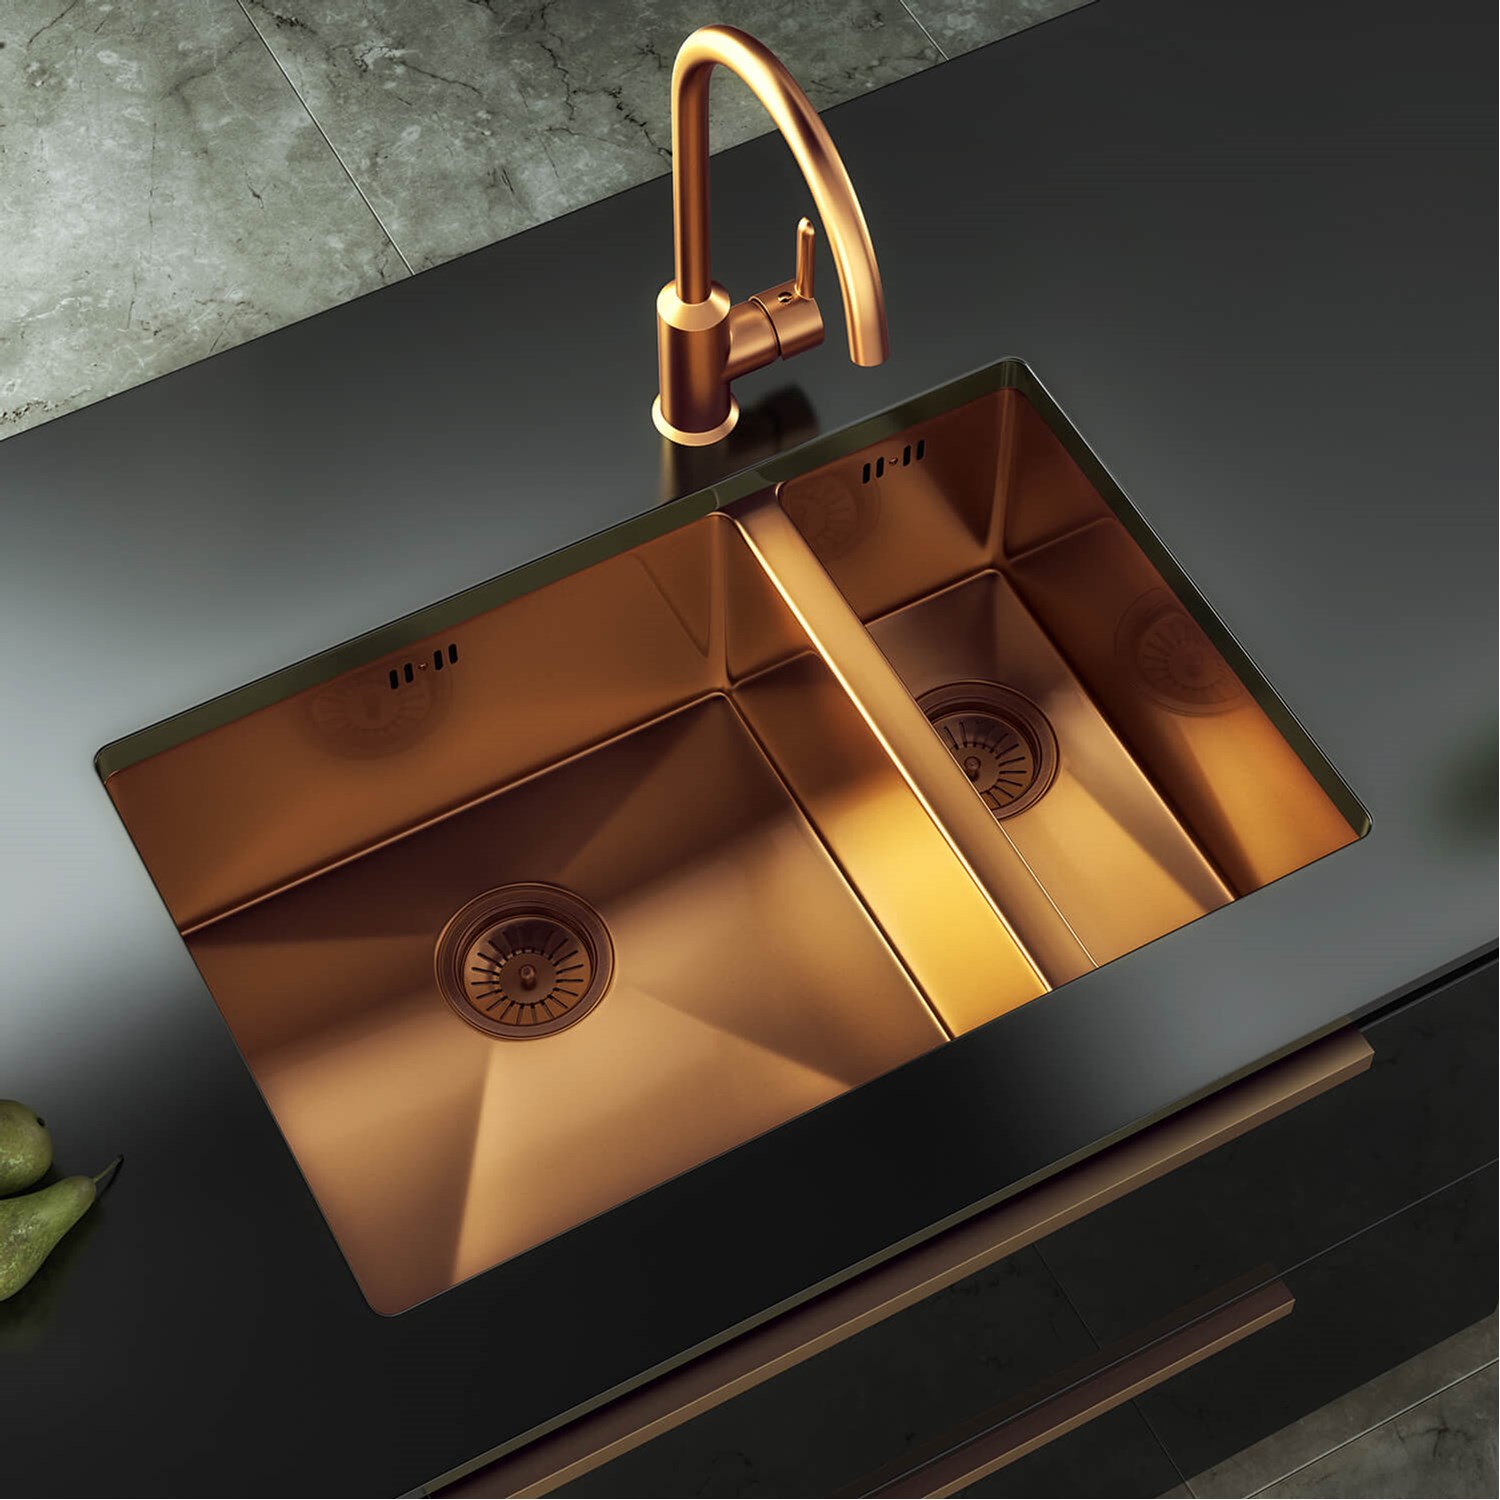 Vellamo Designer 15 Bowl Inset Undermount Brushed Copper Stainless Steel Kitchen Sink Waste 670 X 440mm Tap Warehouse